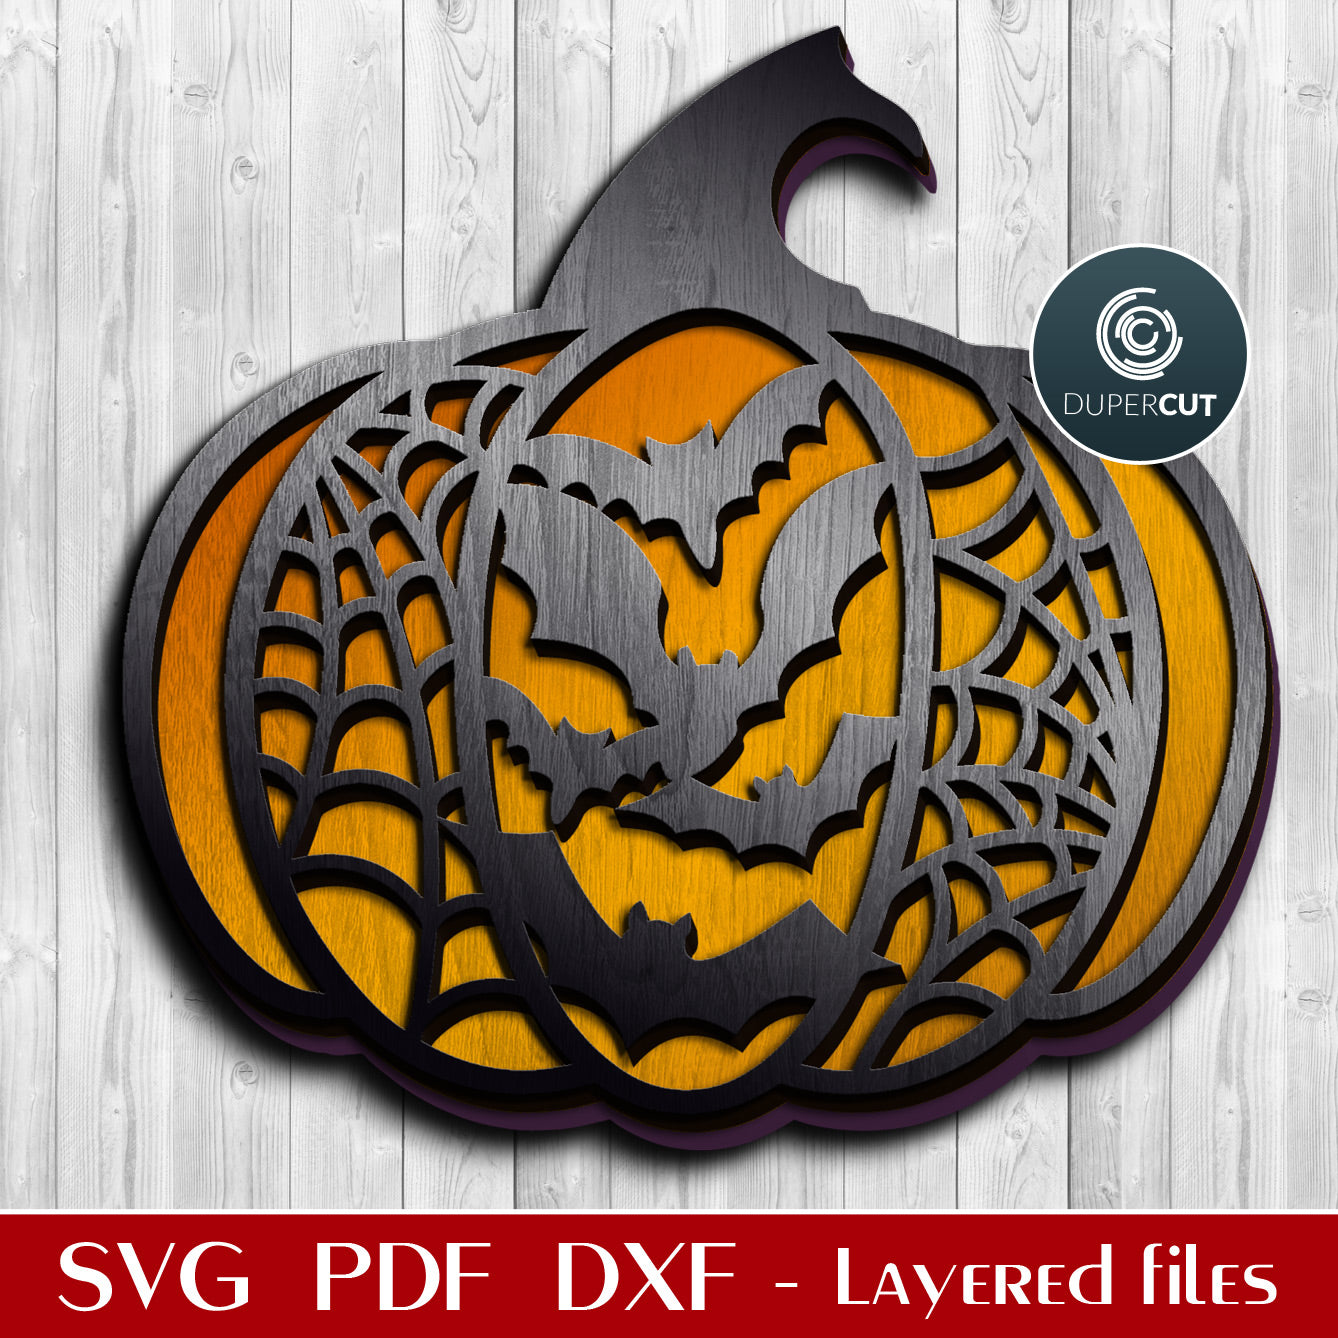 Decorative Halloween pumpkin - SVG PNG DXF layered cutting files for Glowforge, Cricut, Silhouette, laser CNC plasma machines